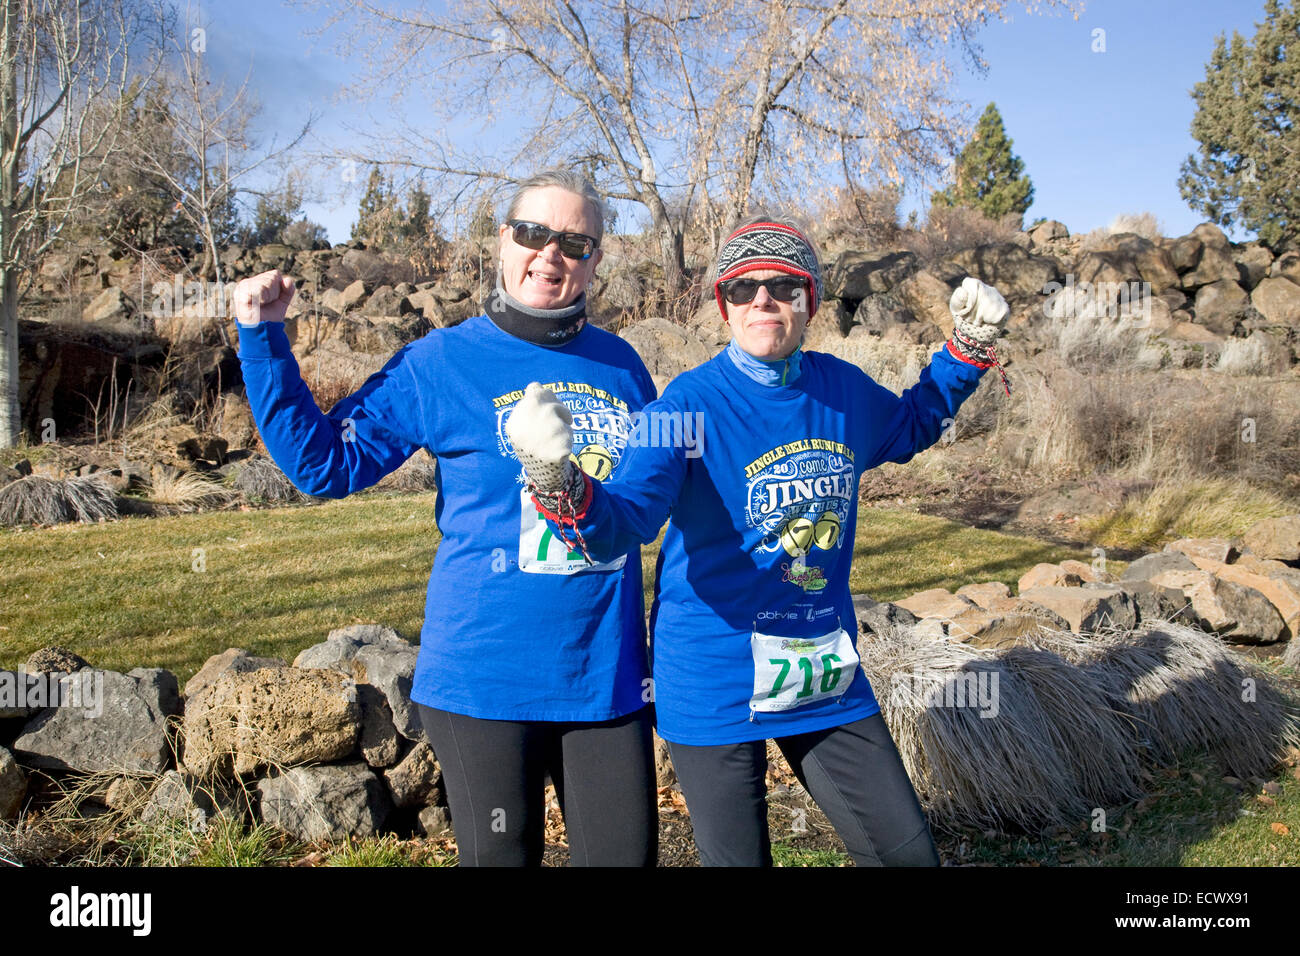 Two middle-aged women preparing to run a half-marathon race in Bend, Oregon Stock Photo